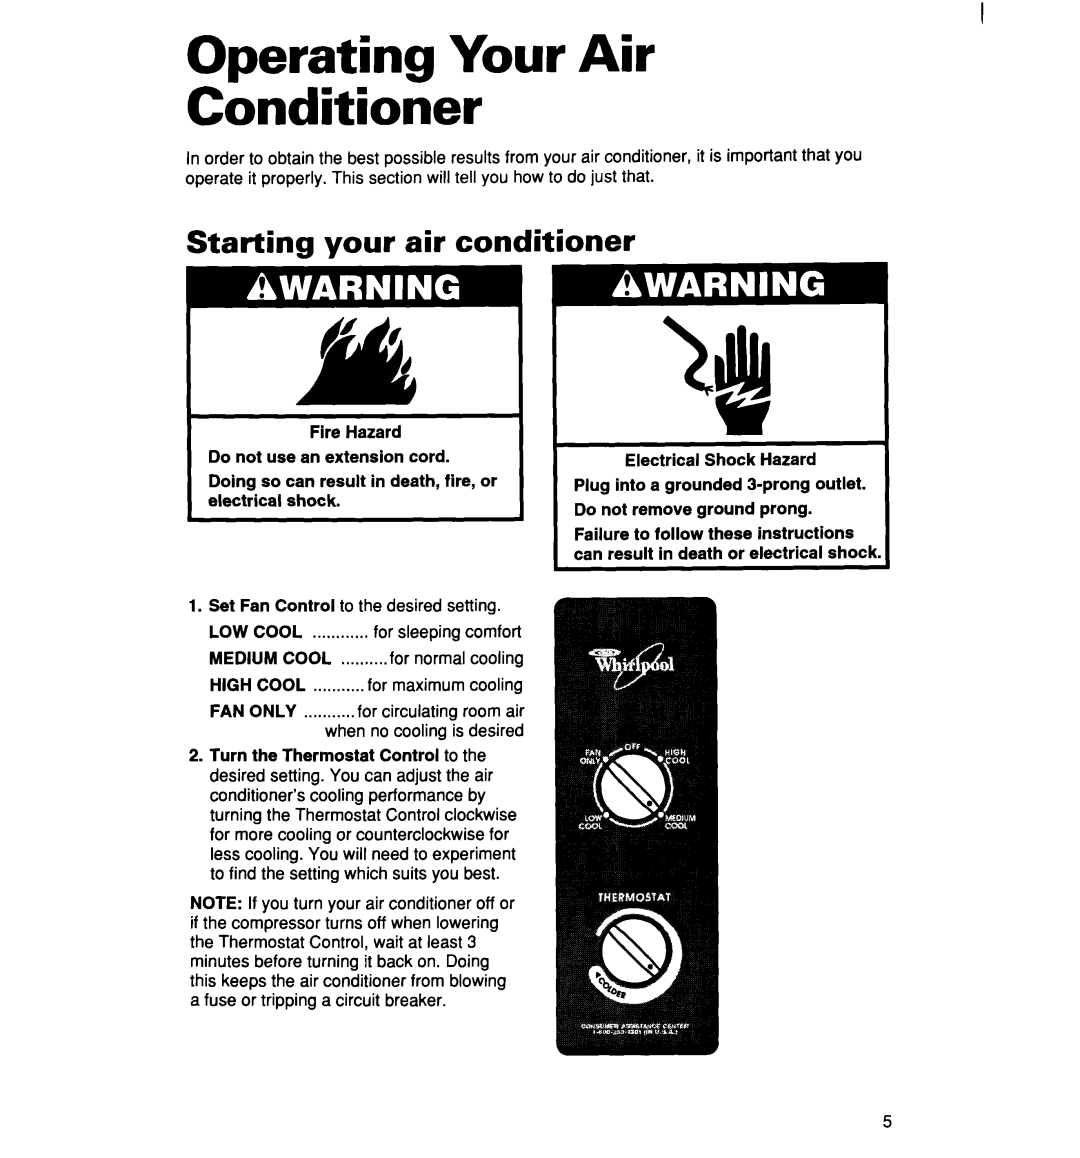 Whirlpool ACM062, ACM072 warranty Operating Your Air Conditioner, Starting your air conditioner 